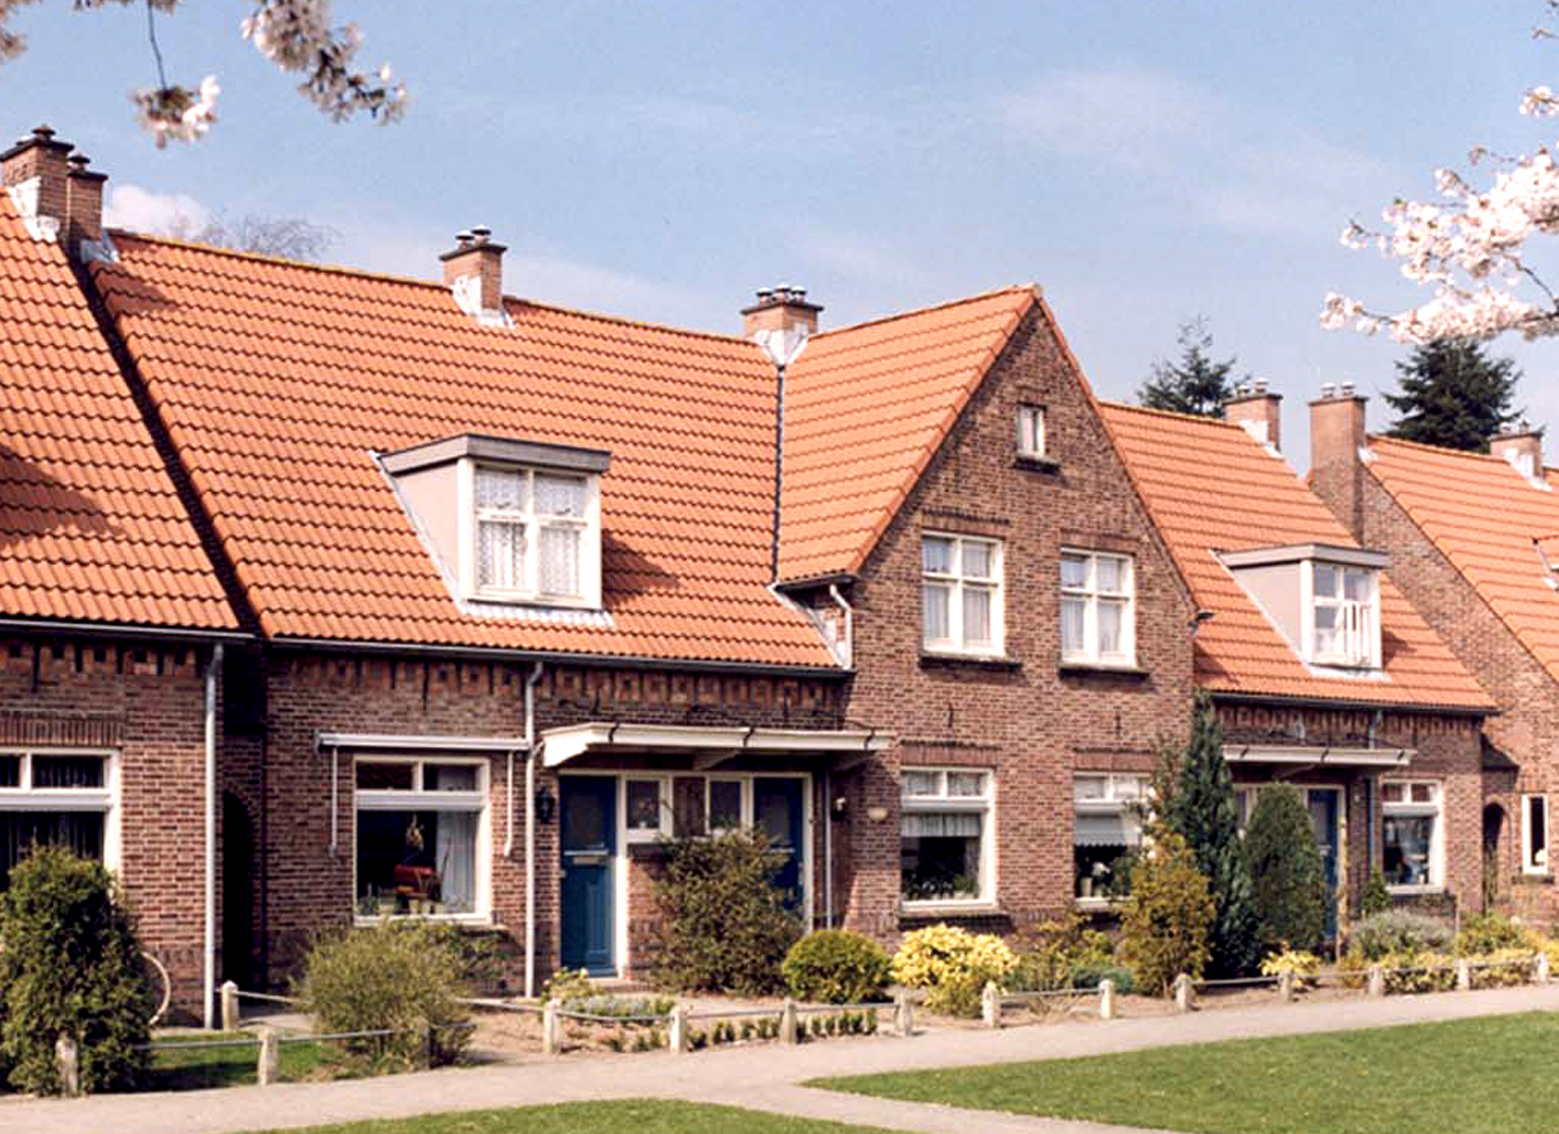 Biezenstraat 54, 7601 VS Almelo, Nederland